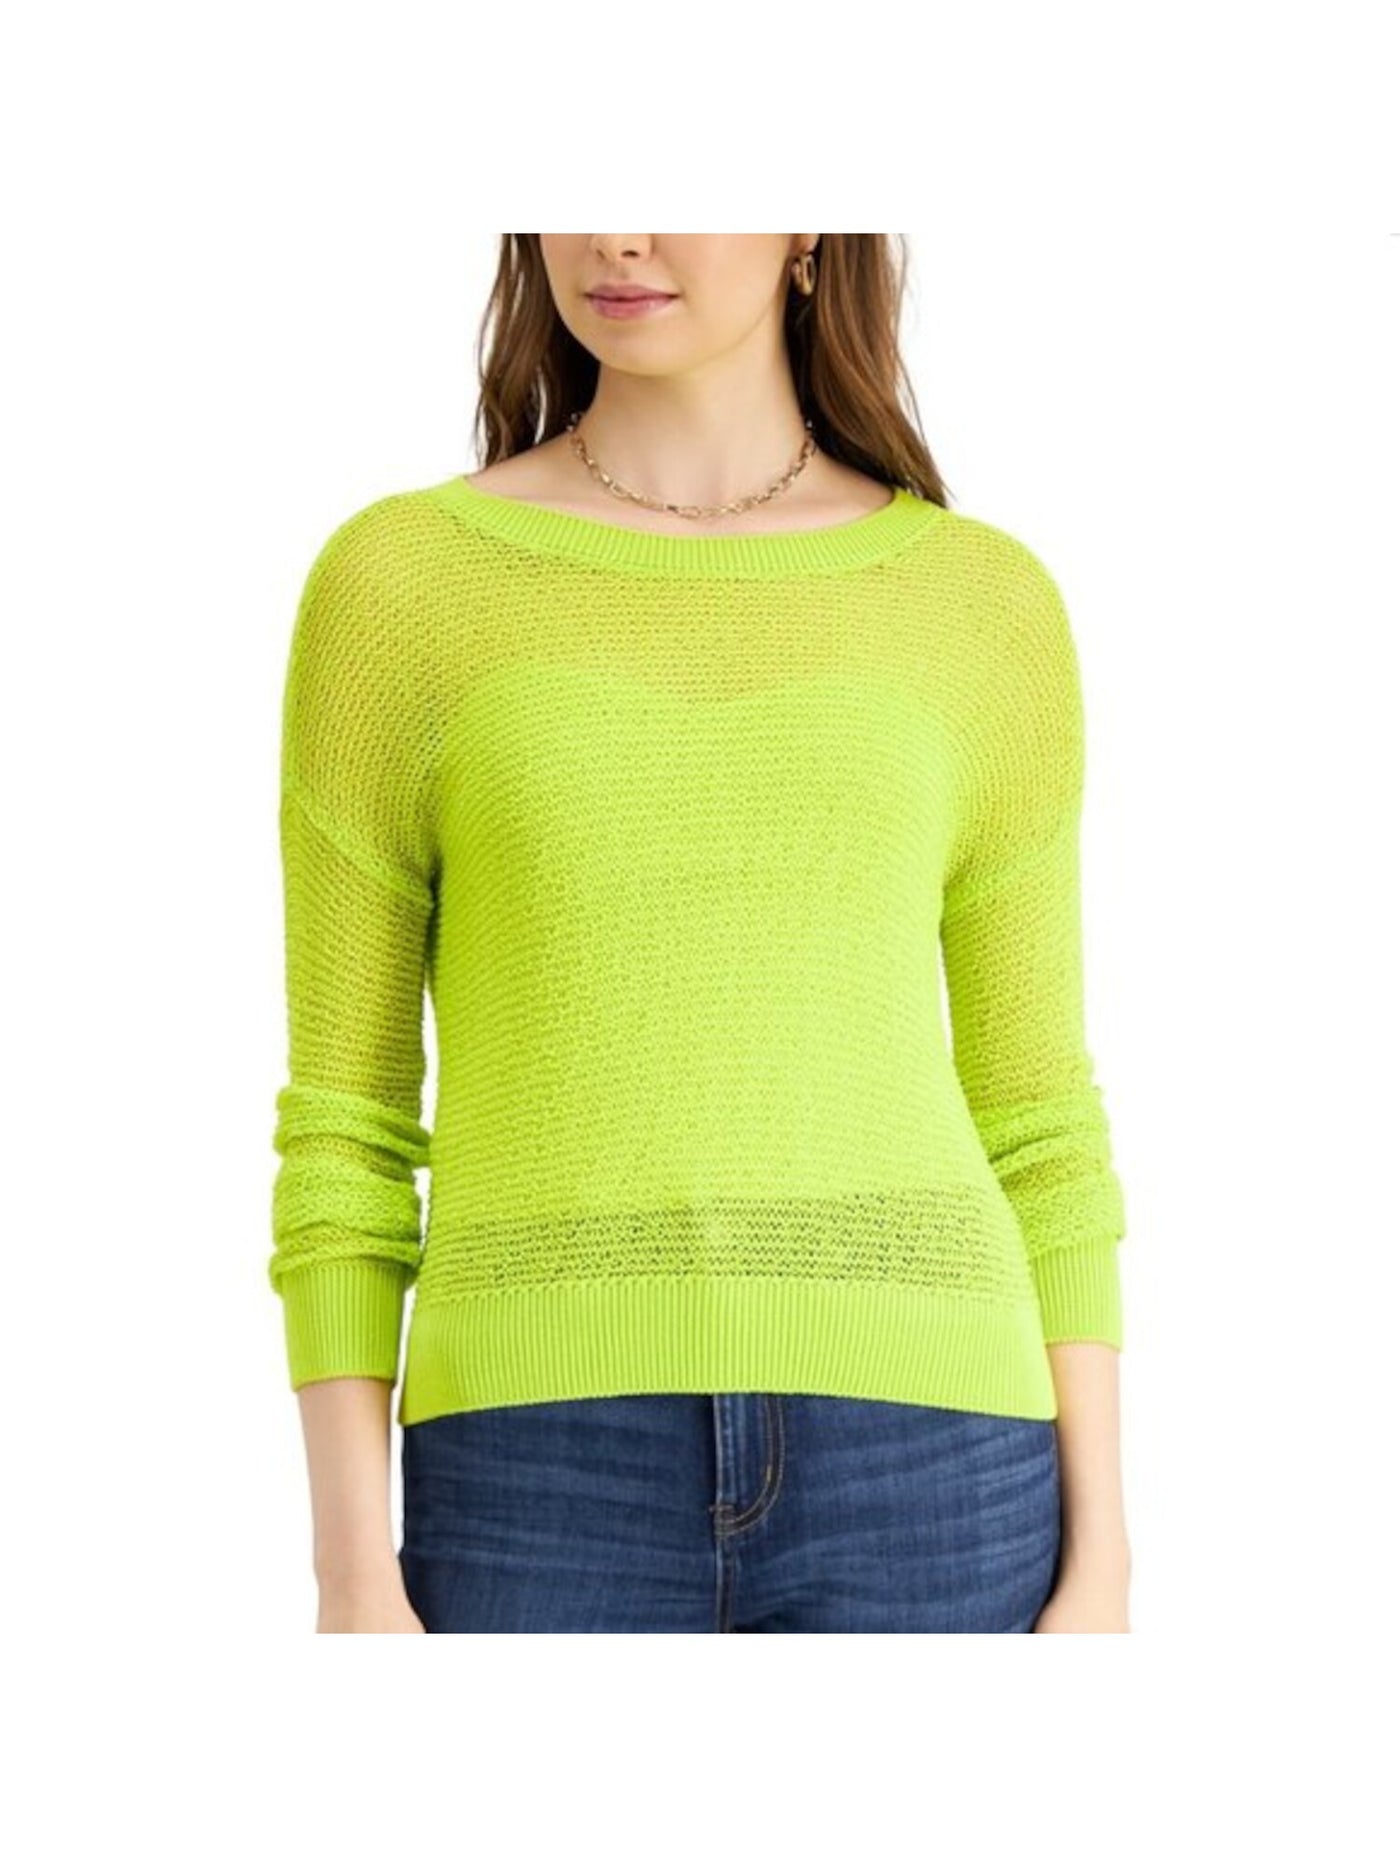 BAR III Womens Yellow Mesh Long Sleeve Scoop Neck Sweater Size: XS